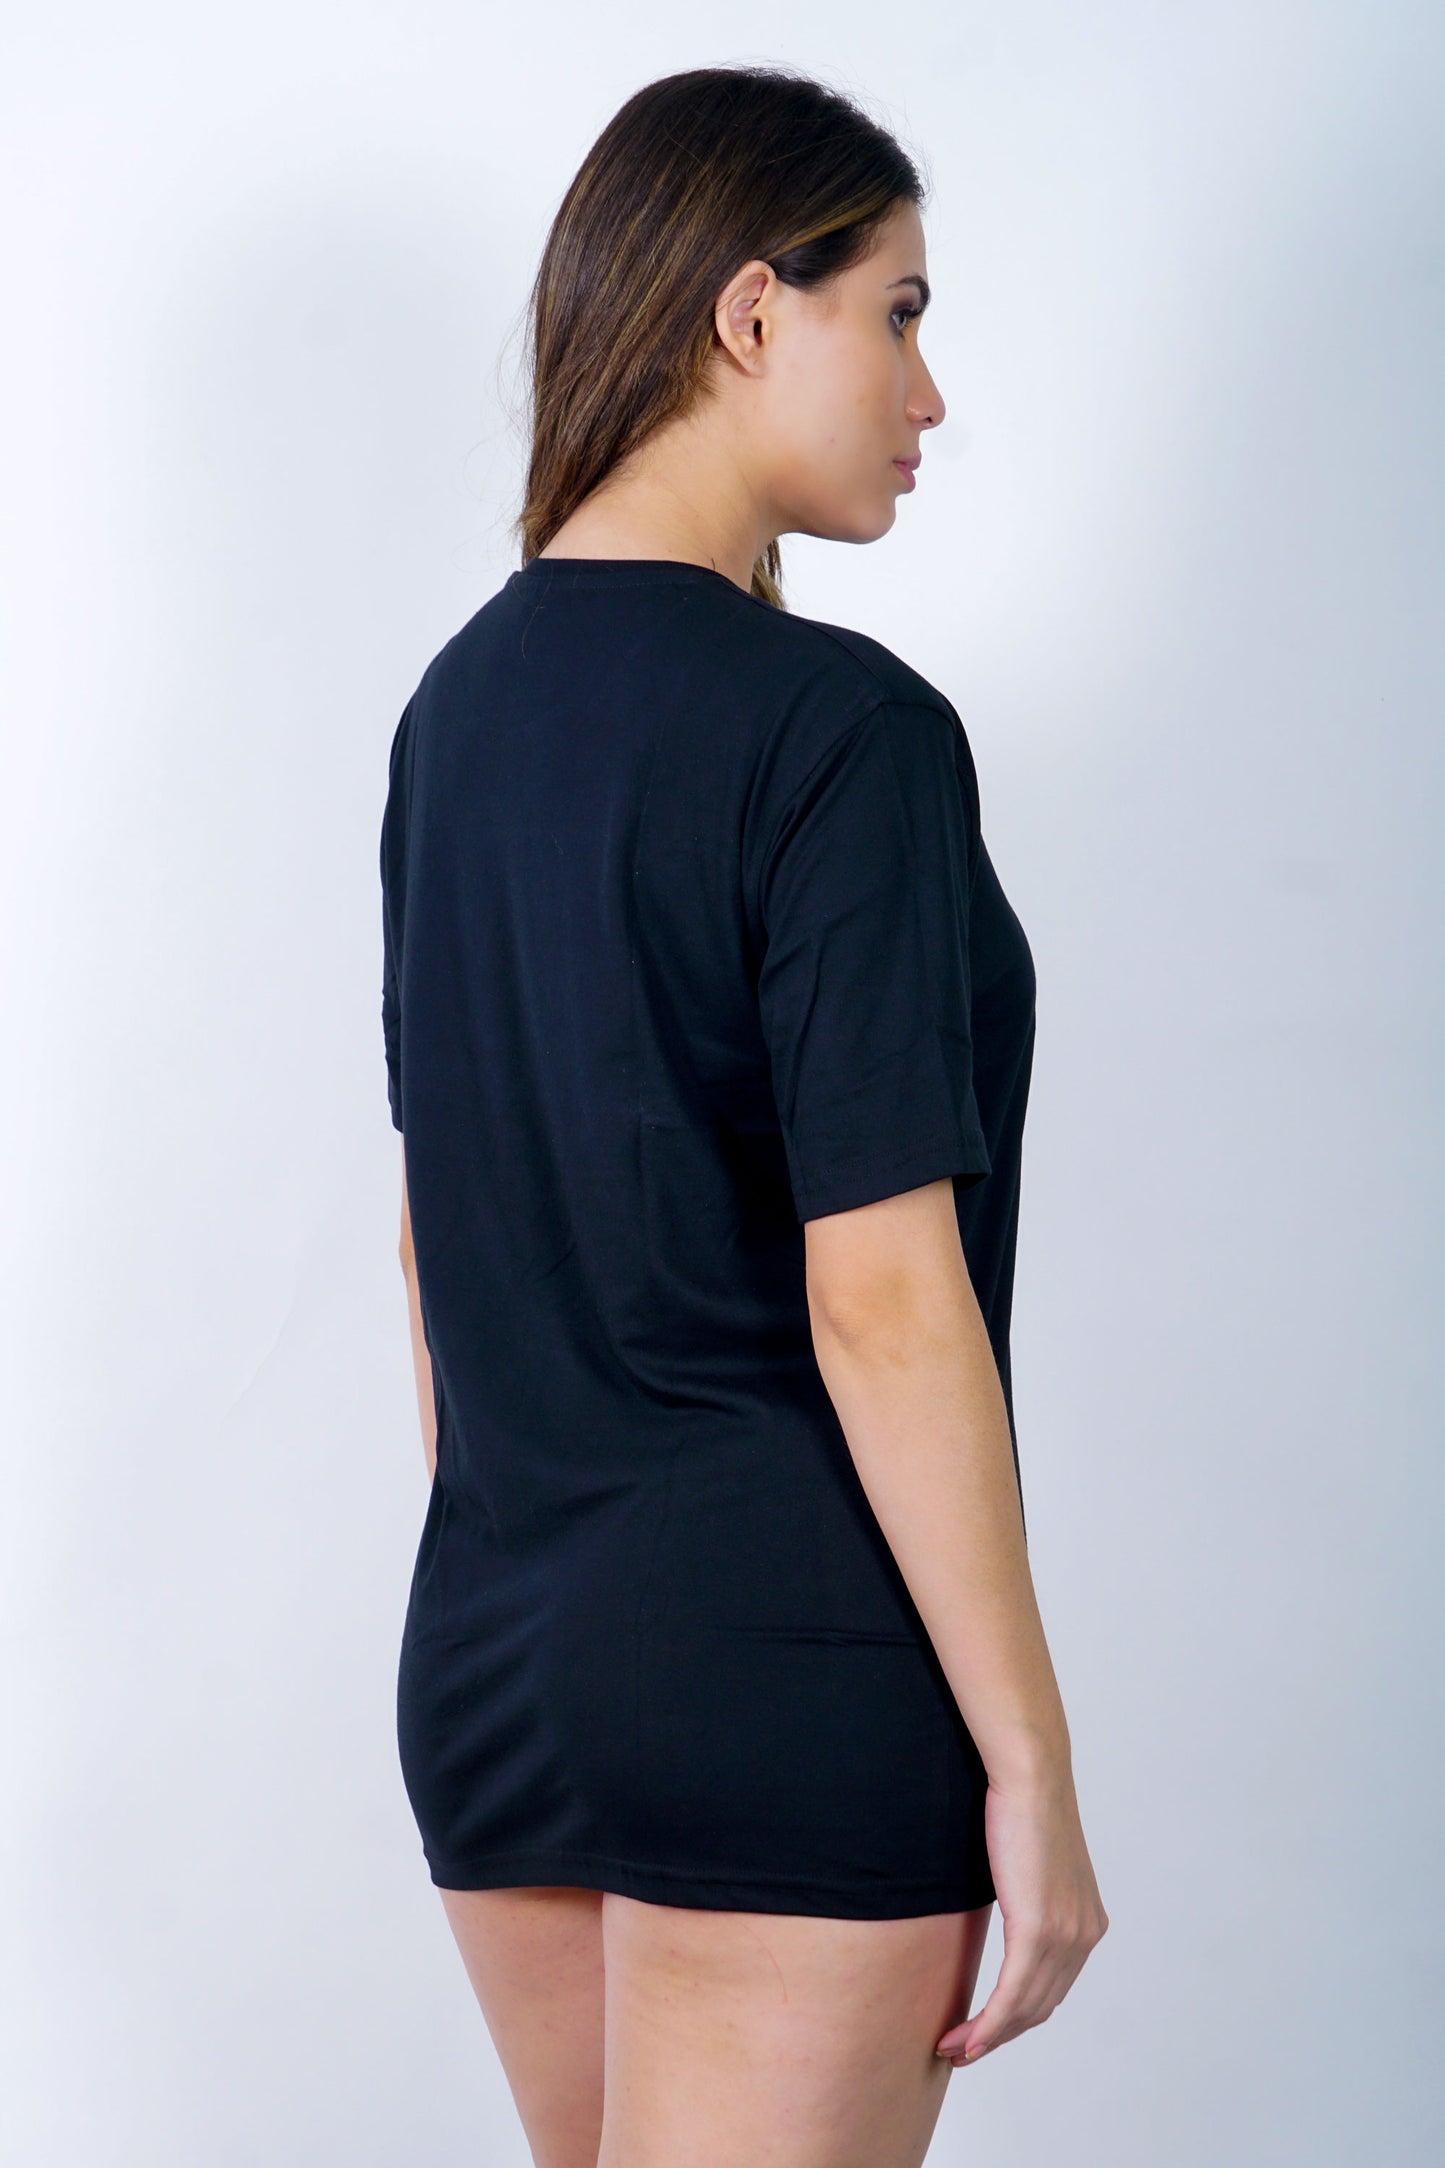 Embroidered Trippy Artwork Women's Half Sleeve Black T-shirt